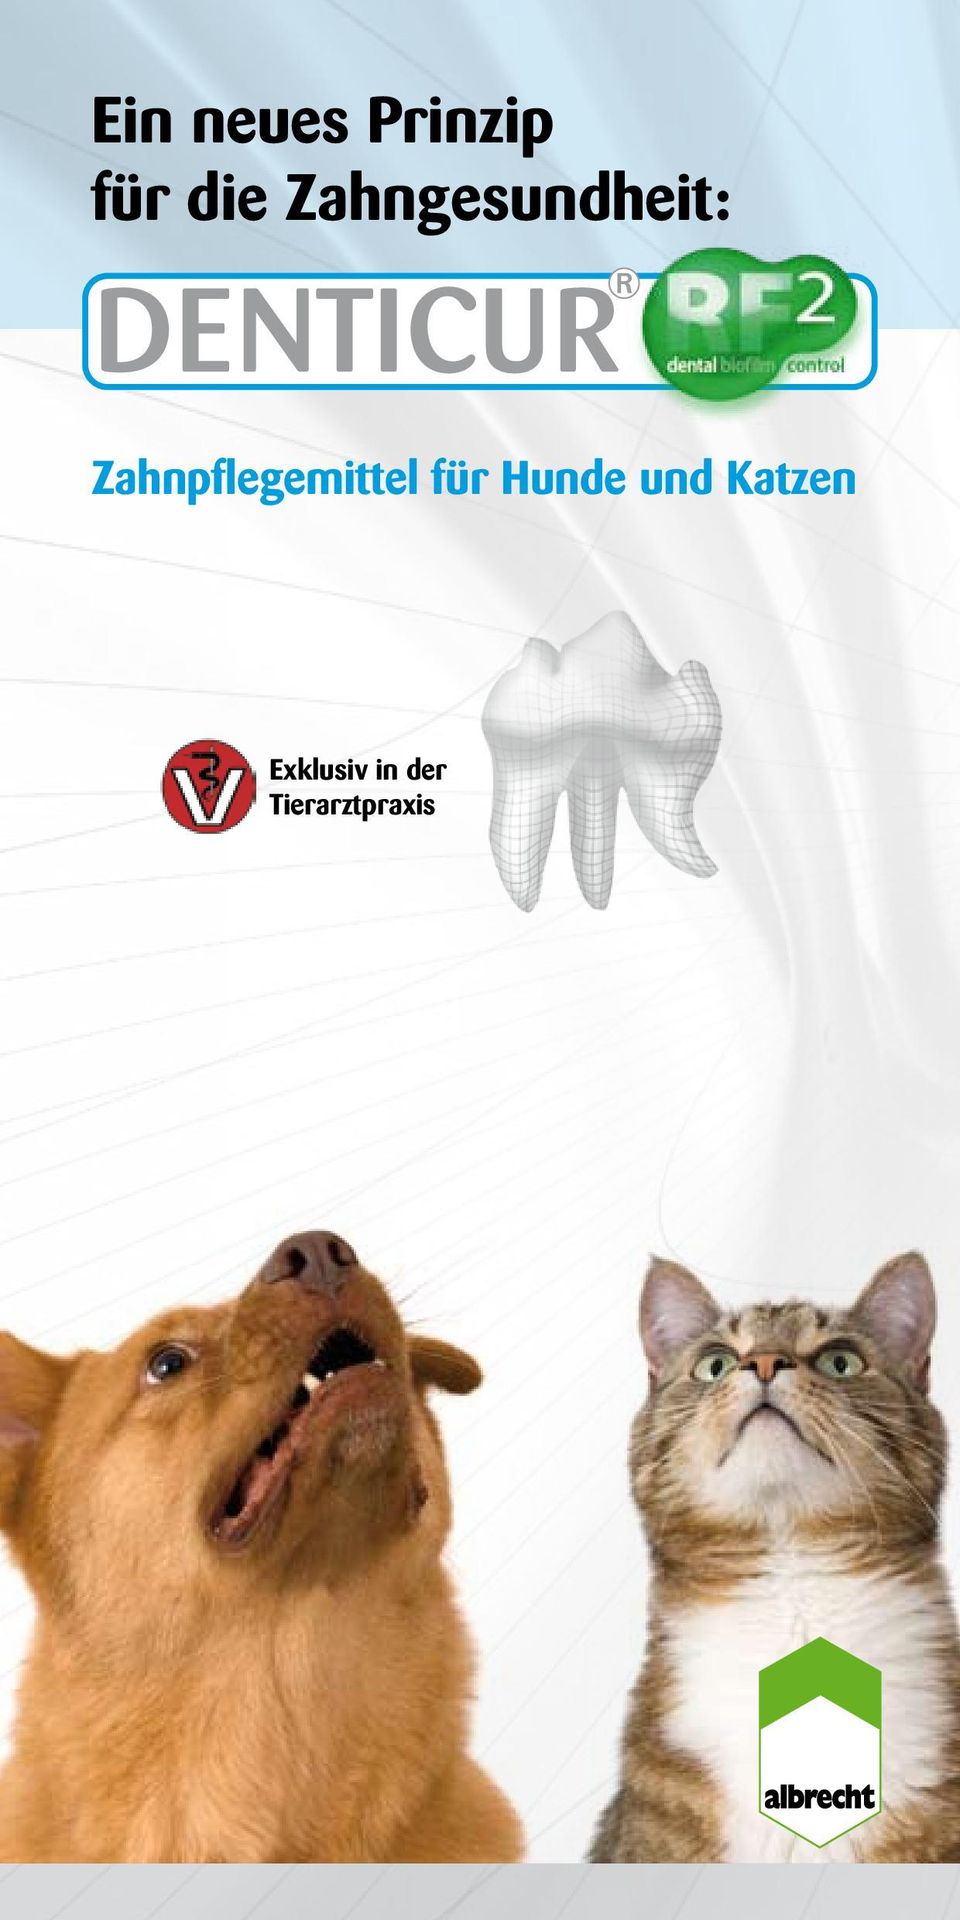 Zahnpflegemittel für Hunde